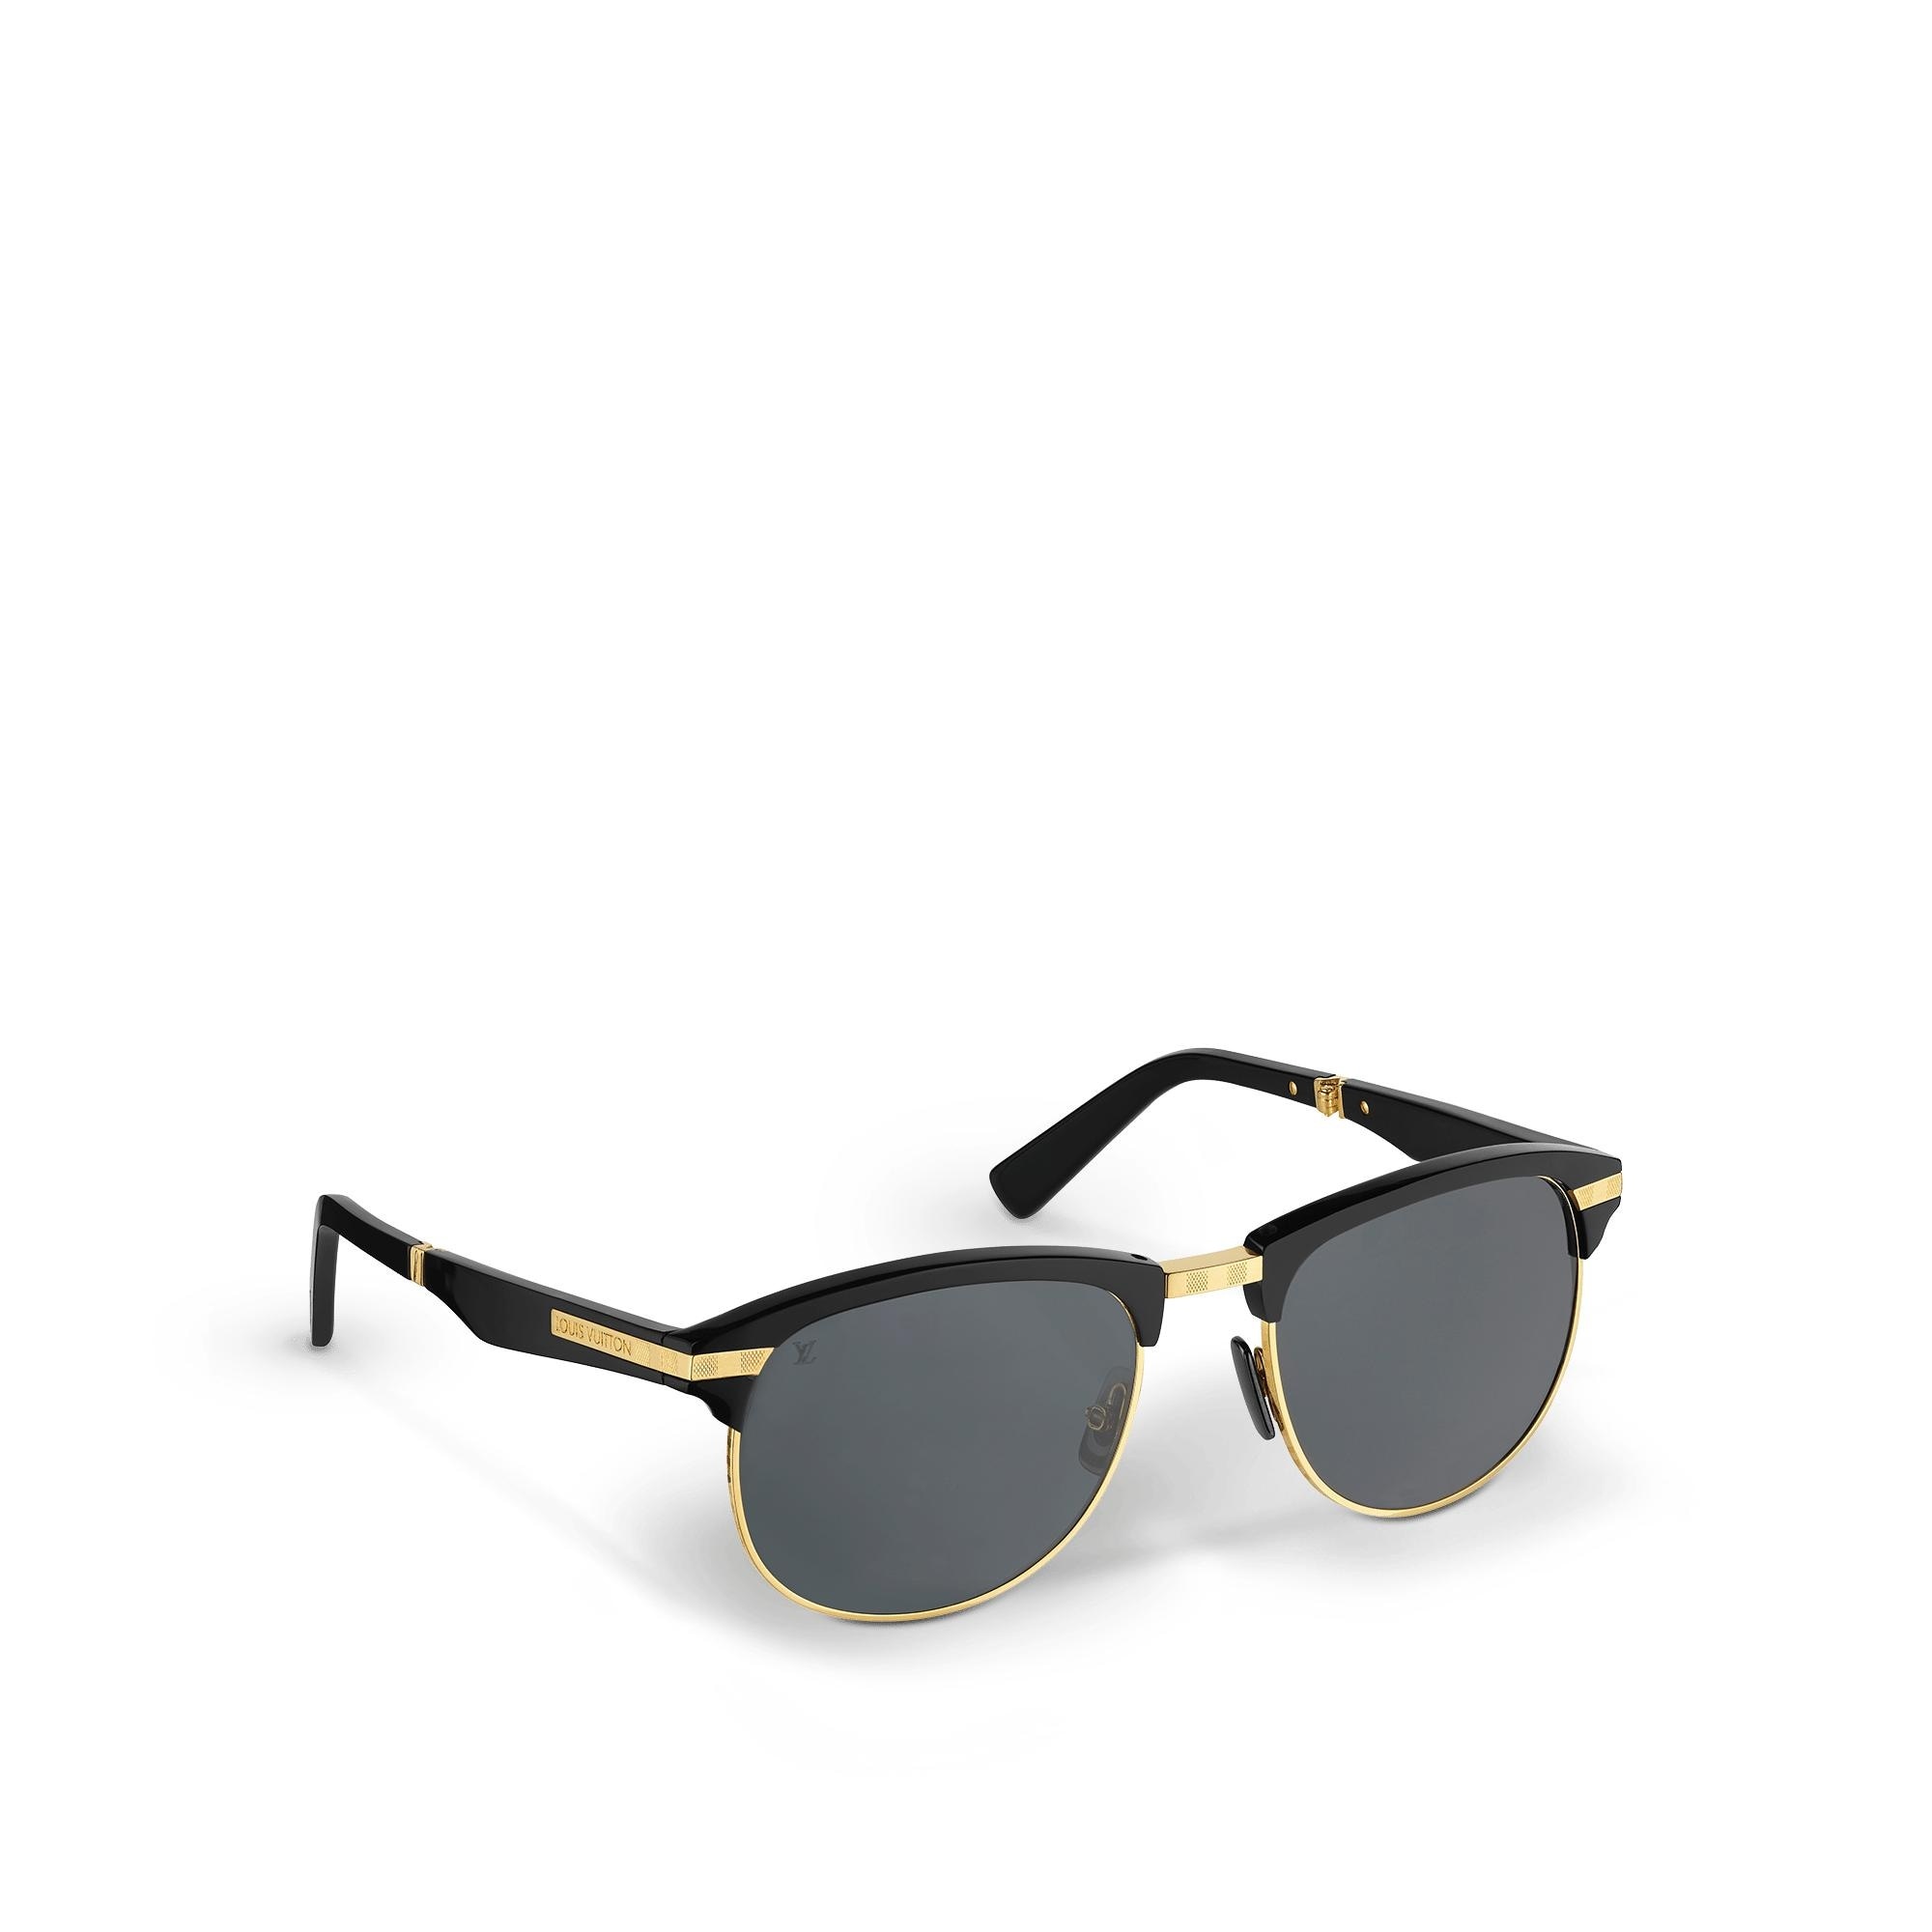 LV In The Pocket Sunglasses - 1